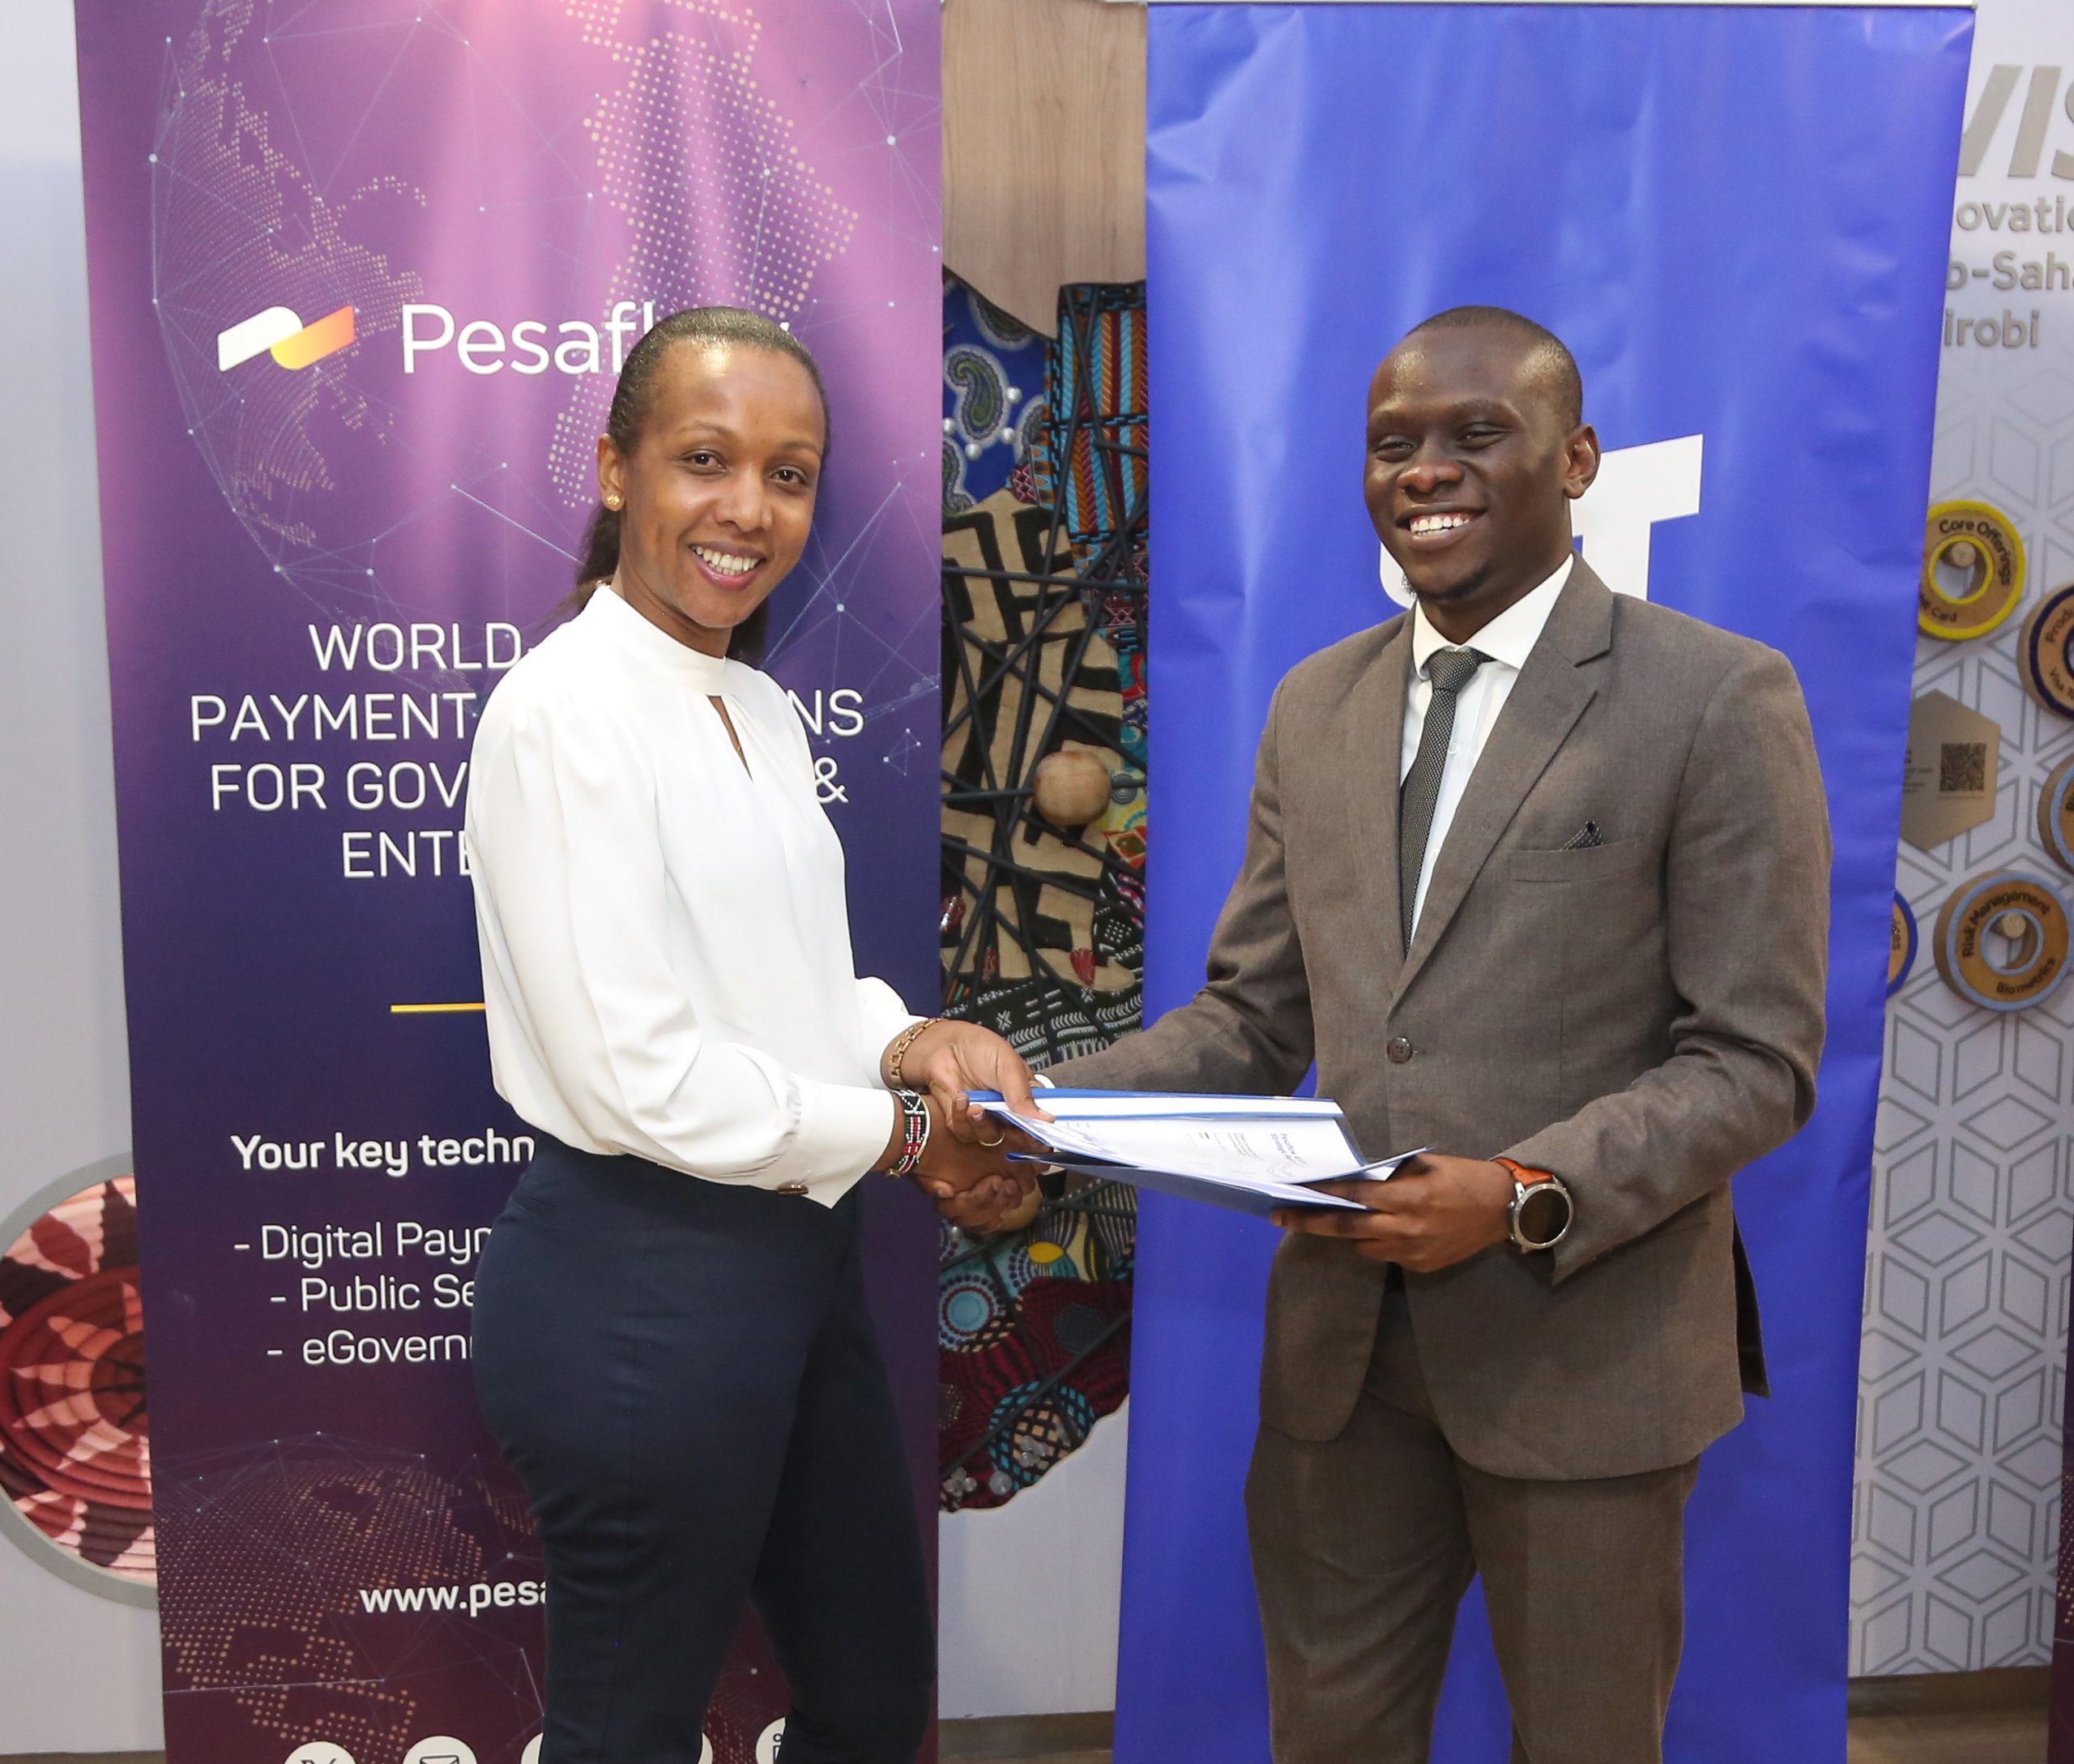 Visa Kenya Country Manager, Eva Ngigi-Sarwari and Pesaflow CEO, Evid Sibi during the strategic partnership signing ceremony between Visa and Pesaflow.